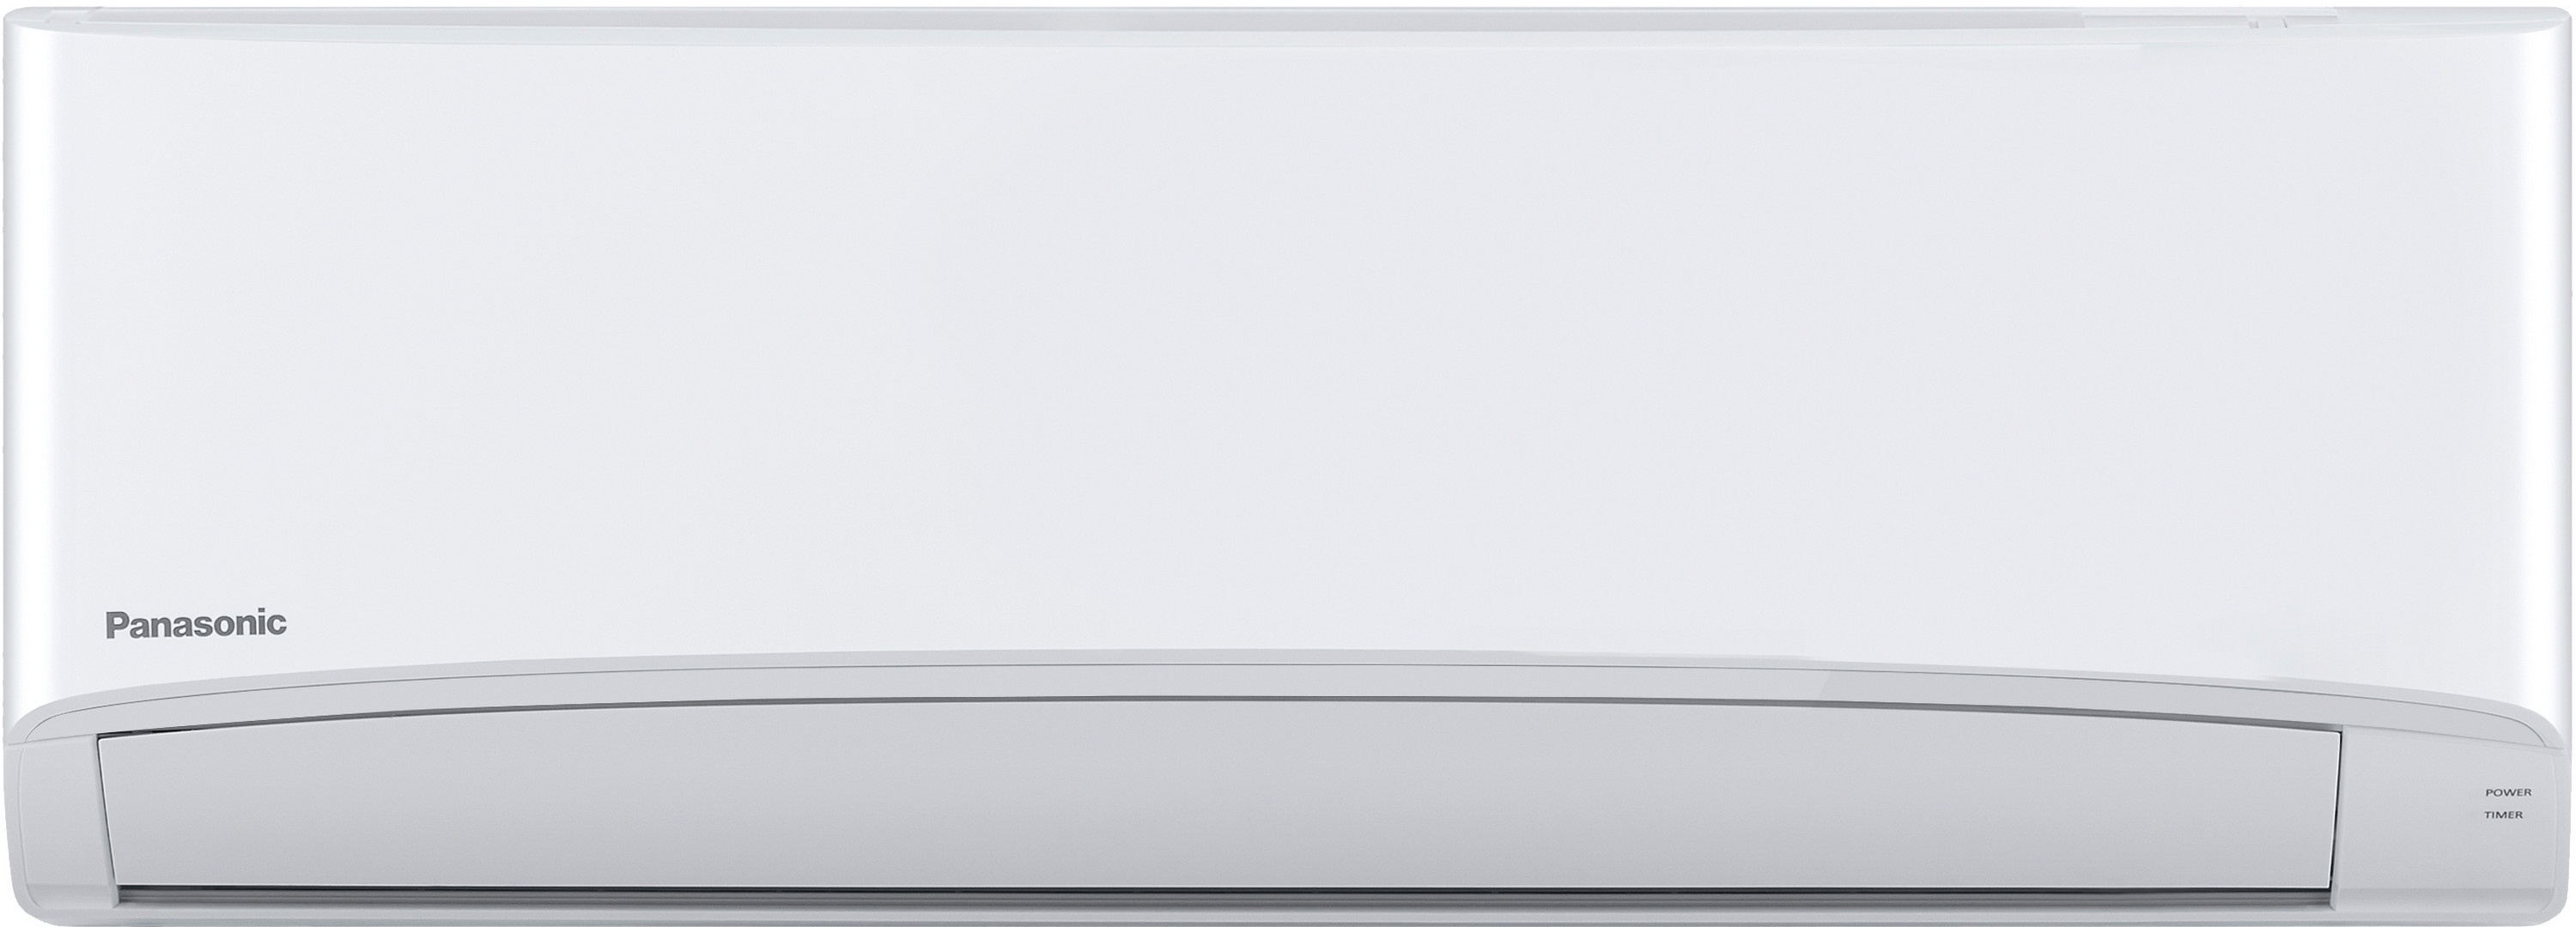 Кондиционер сплит-система Panasonic Compact Inverter CS/CU-TZ25TKEW цена 31999.00 грн - фотография 2